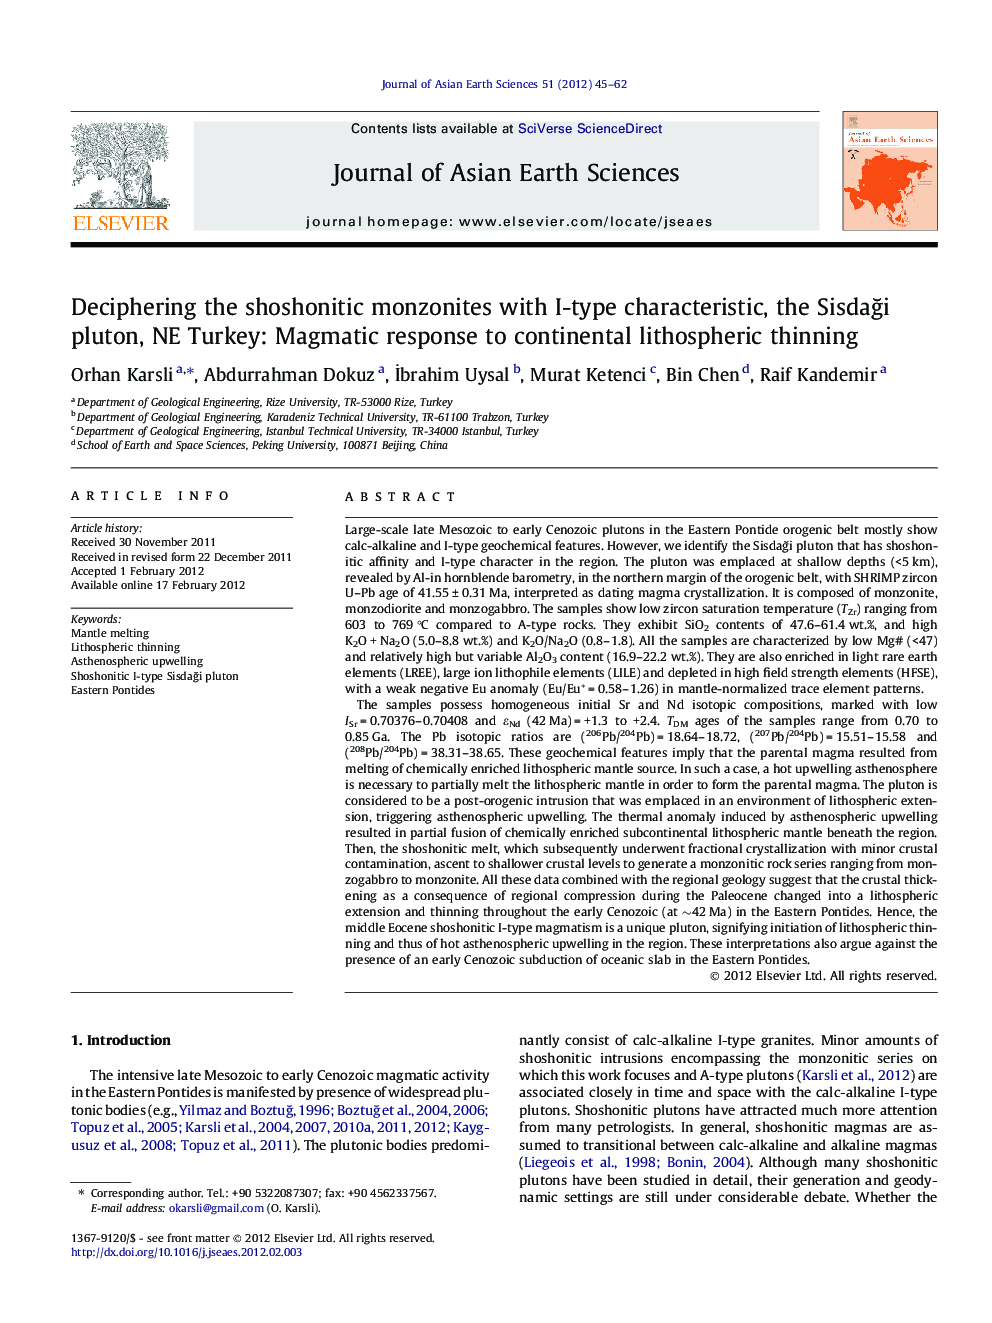 Deciphering the shoshonitic monzonites with I-type characteristic, the Sisdaği pluton, NE Turkey: Magmatic response to continental lithospheric thinning